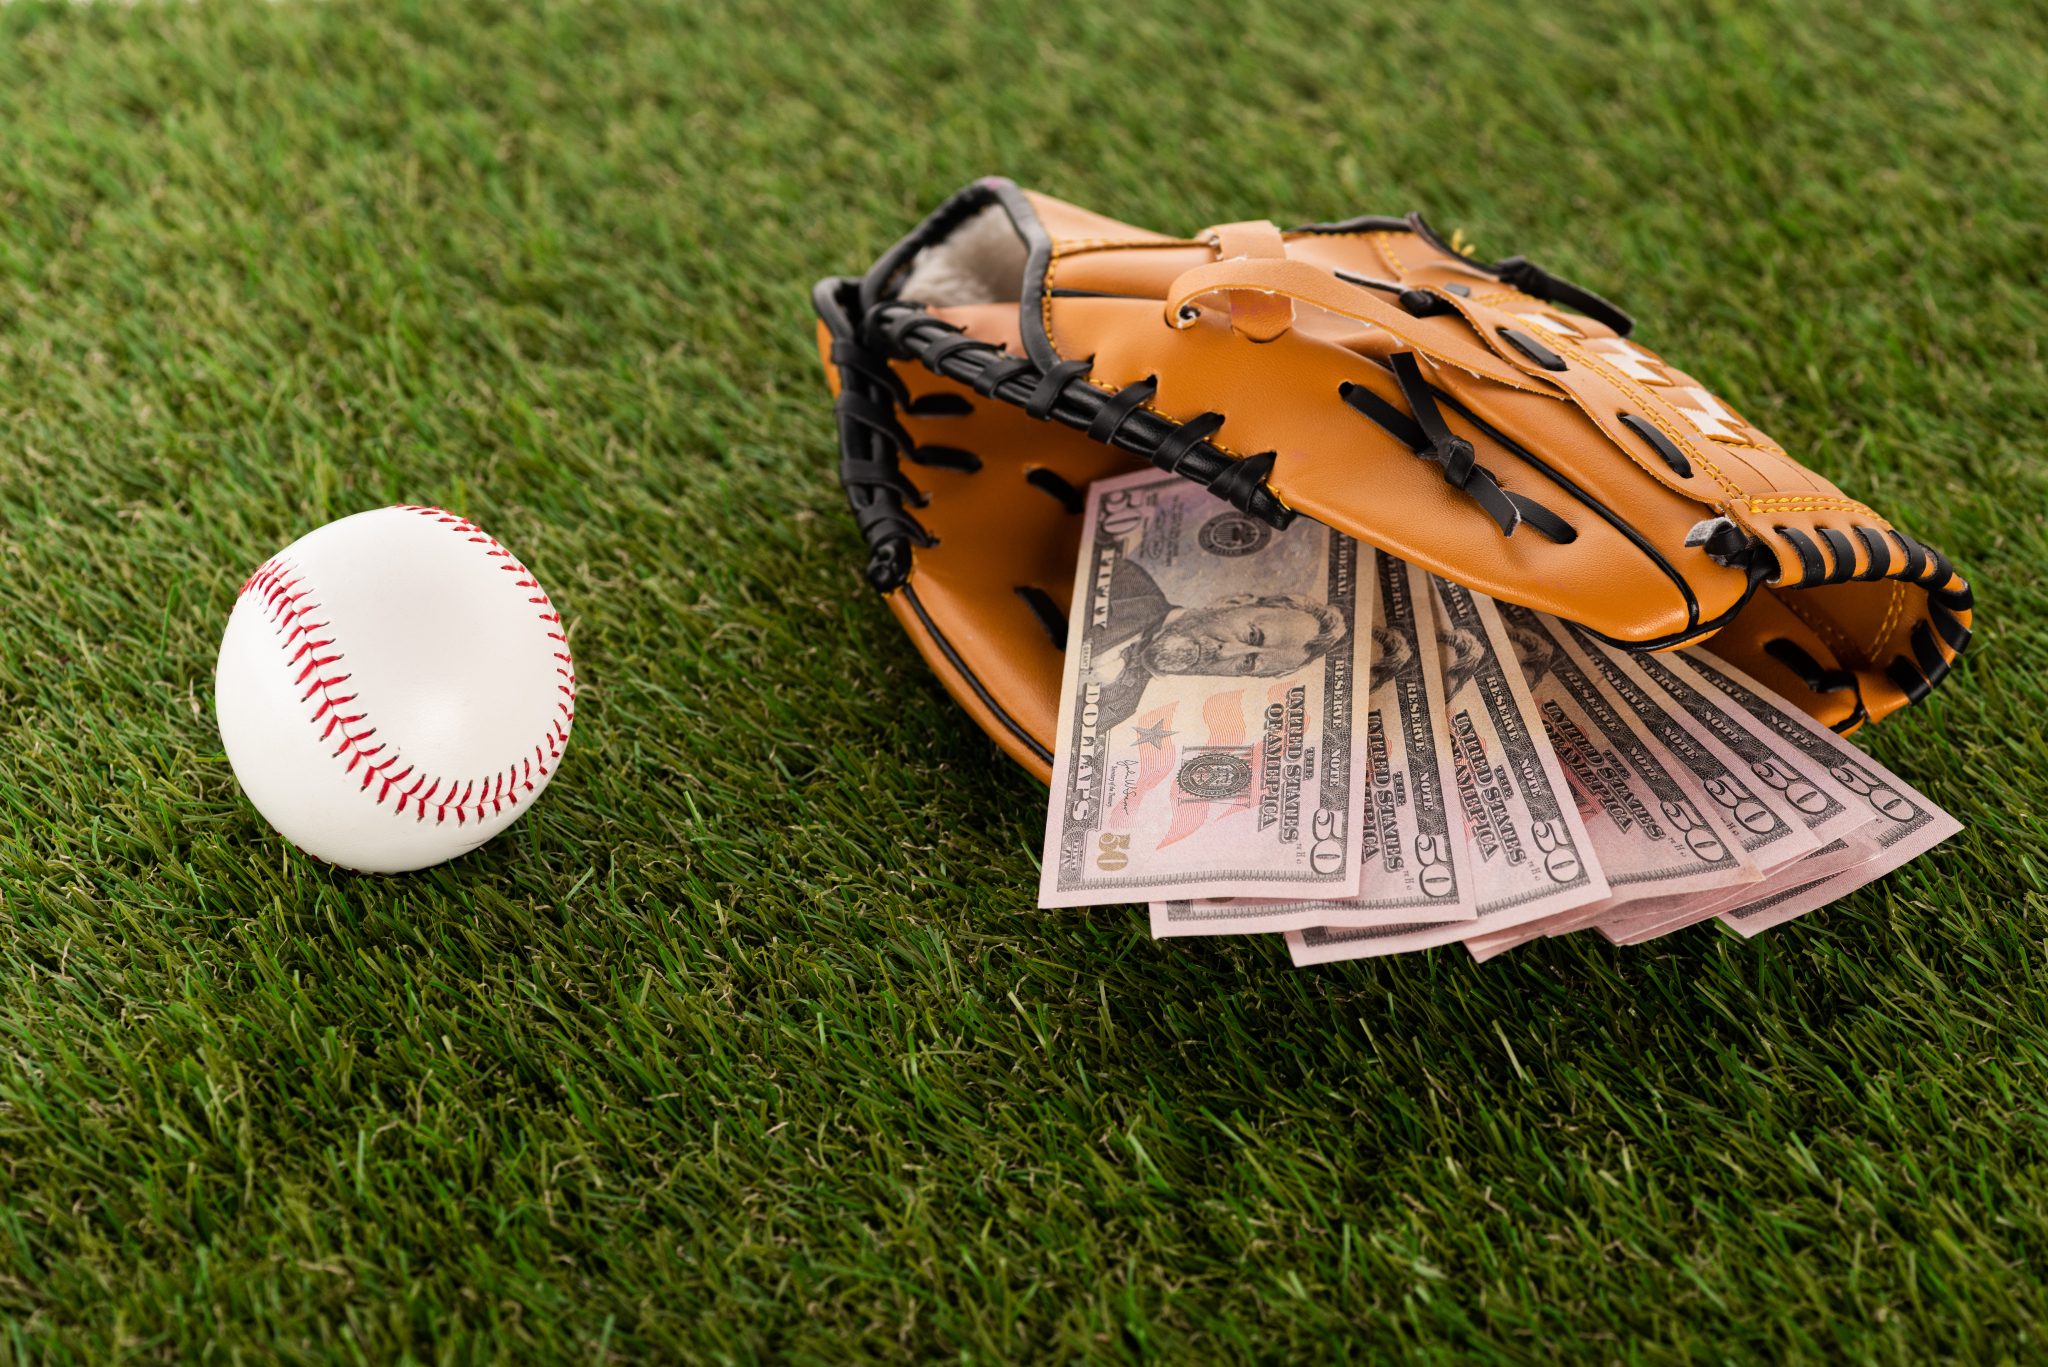 dollar banknotes in baseball glove near ball on green grass, sports betting concept